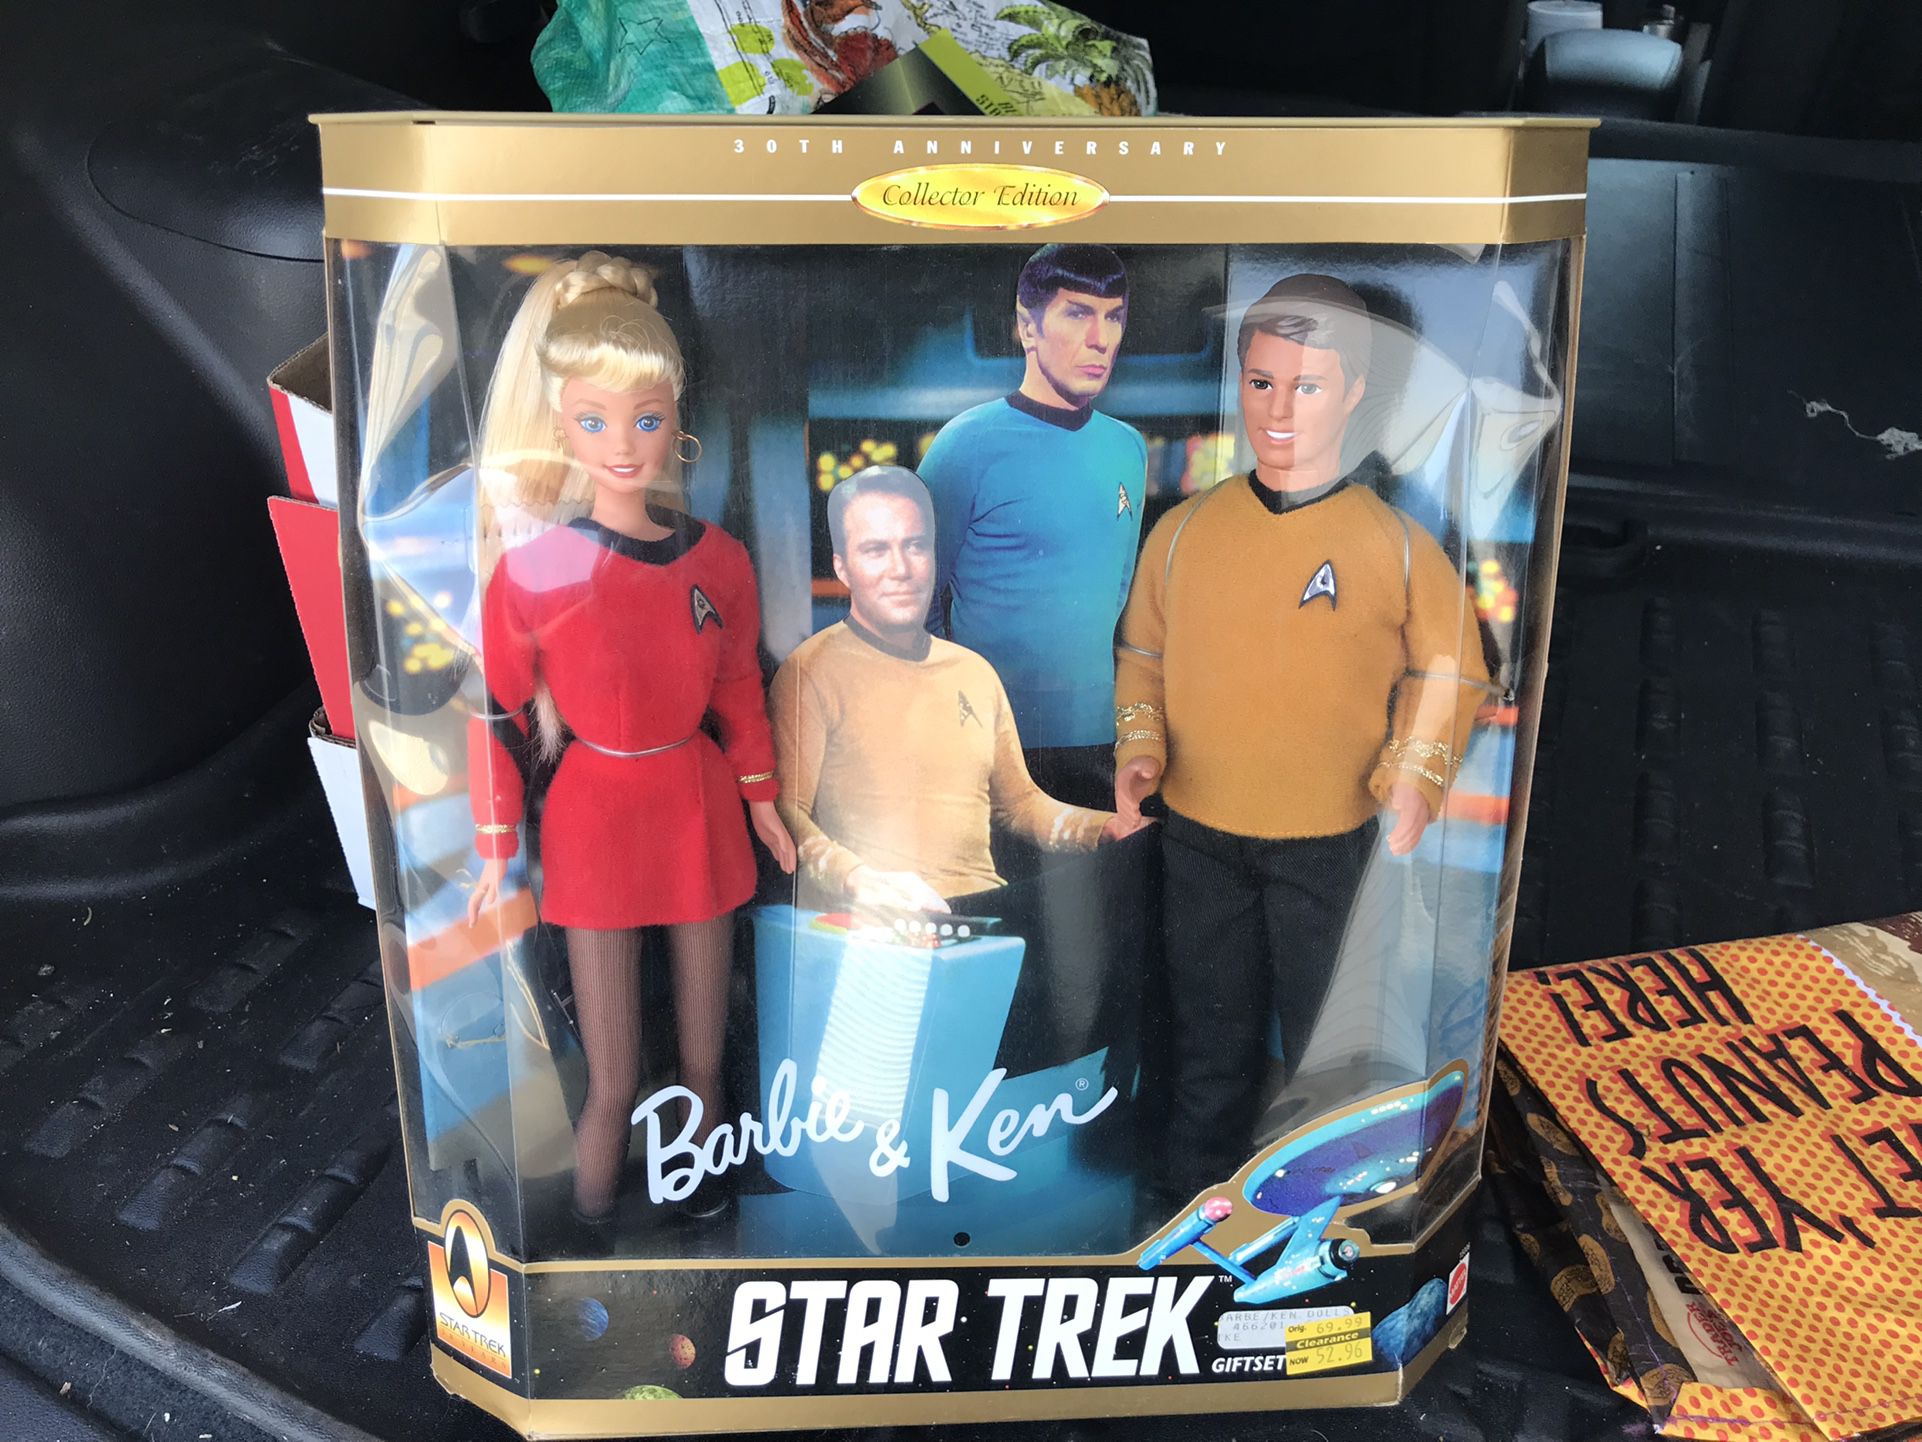 Star Trek Barbie&Ken